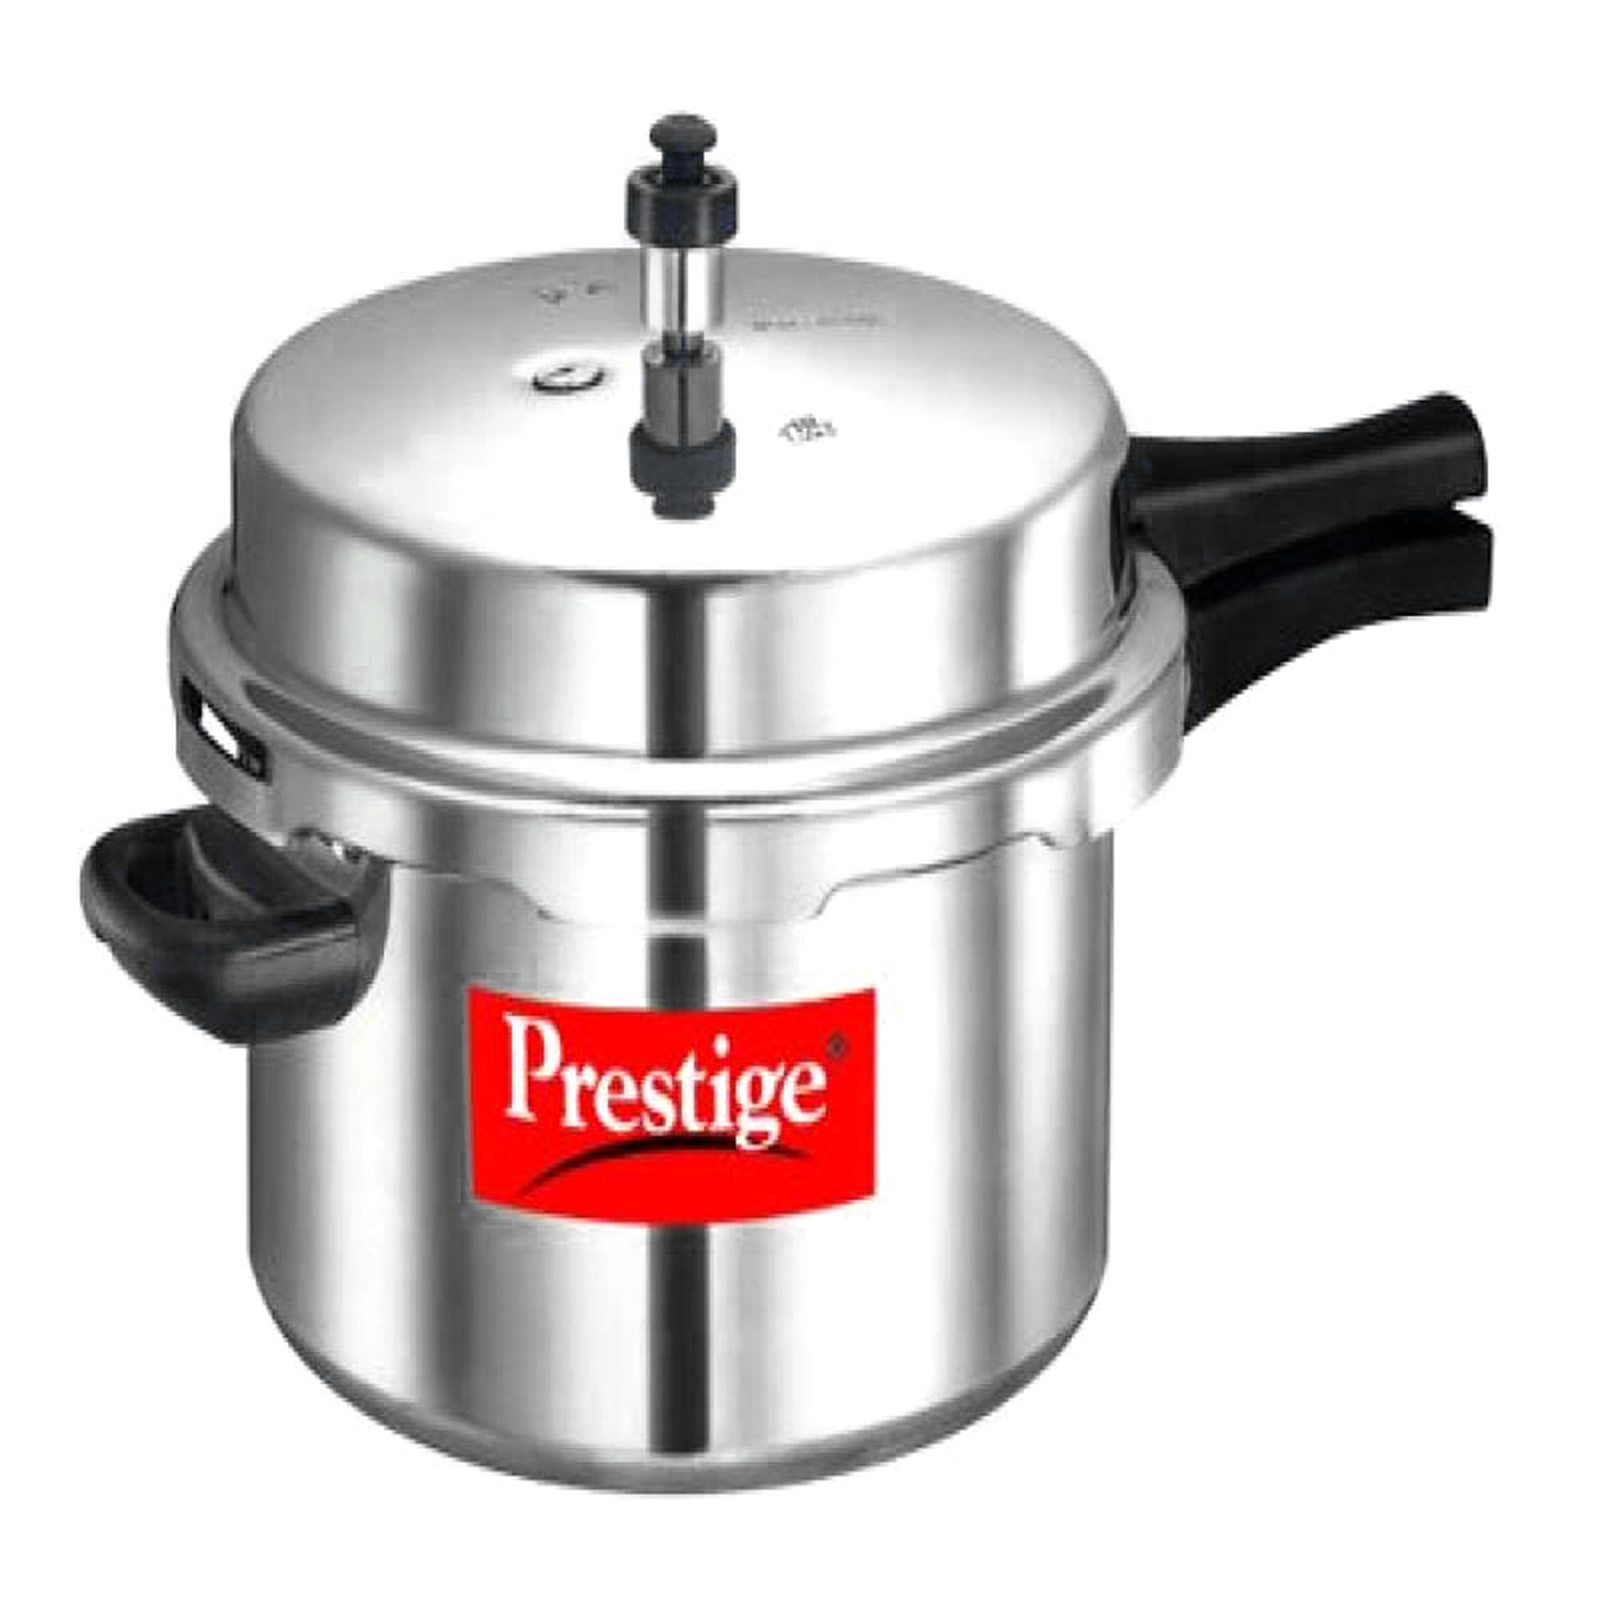 Prestige PPAPC7.5 Popular 7.5L Aluminium Pressure Cooker - Silver